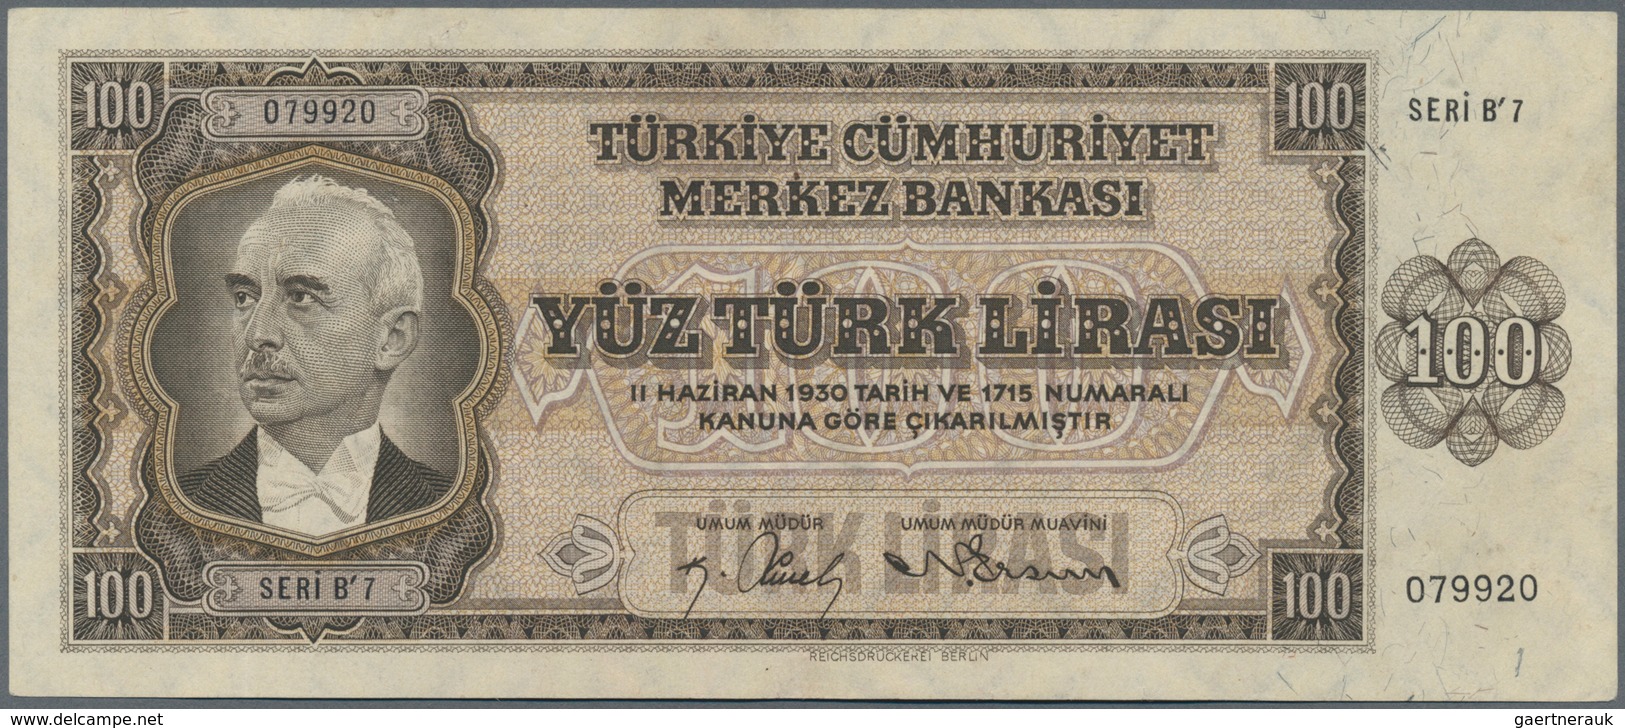 Turkey / Türkei: Türkiye Cümhuriyet Merkez Bankasi 100 Lira L.1930 ND(1942-47), Reichsdruckerei Berl - Turkey